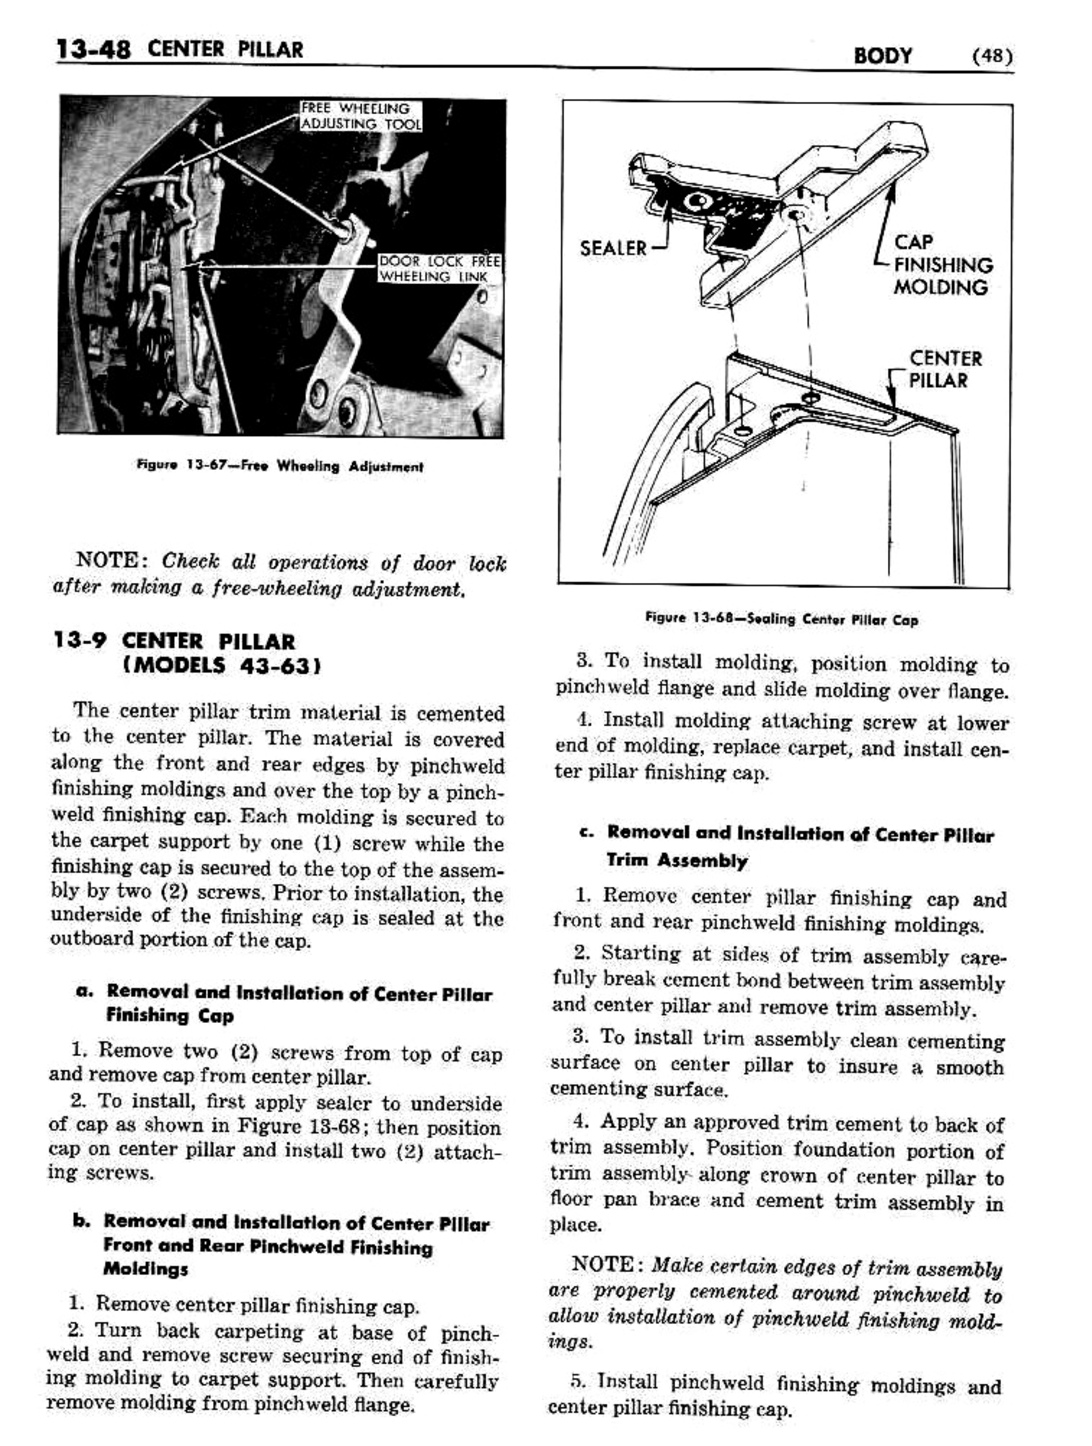 n_1958 Buick Body Service Manual-049-049.jpg